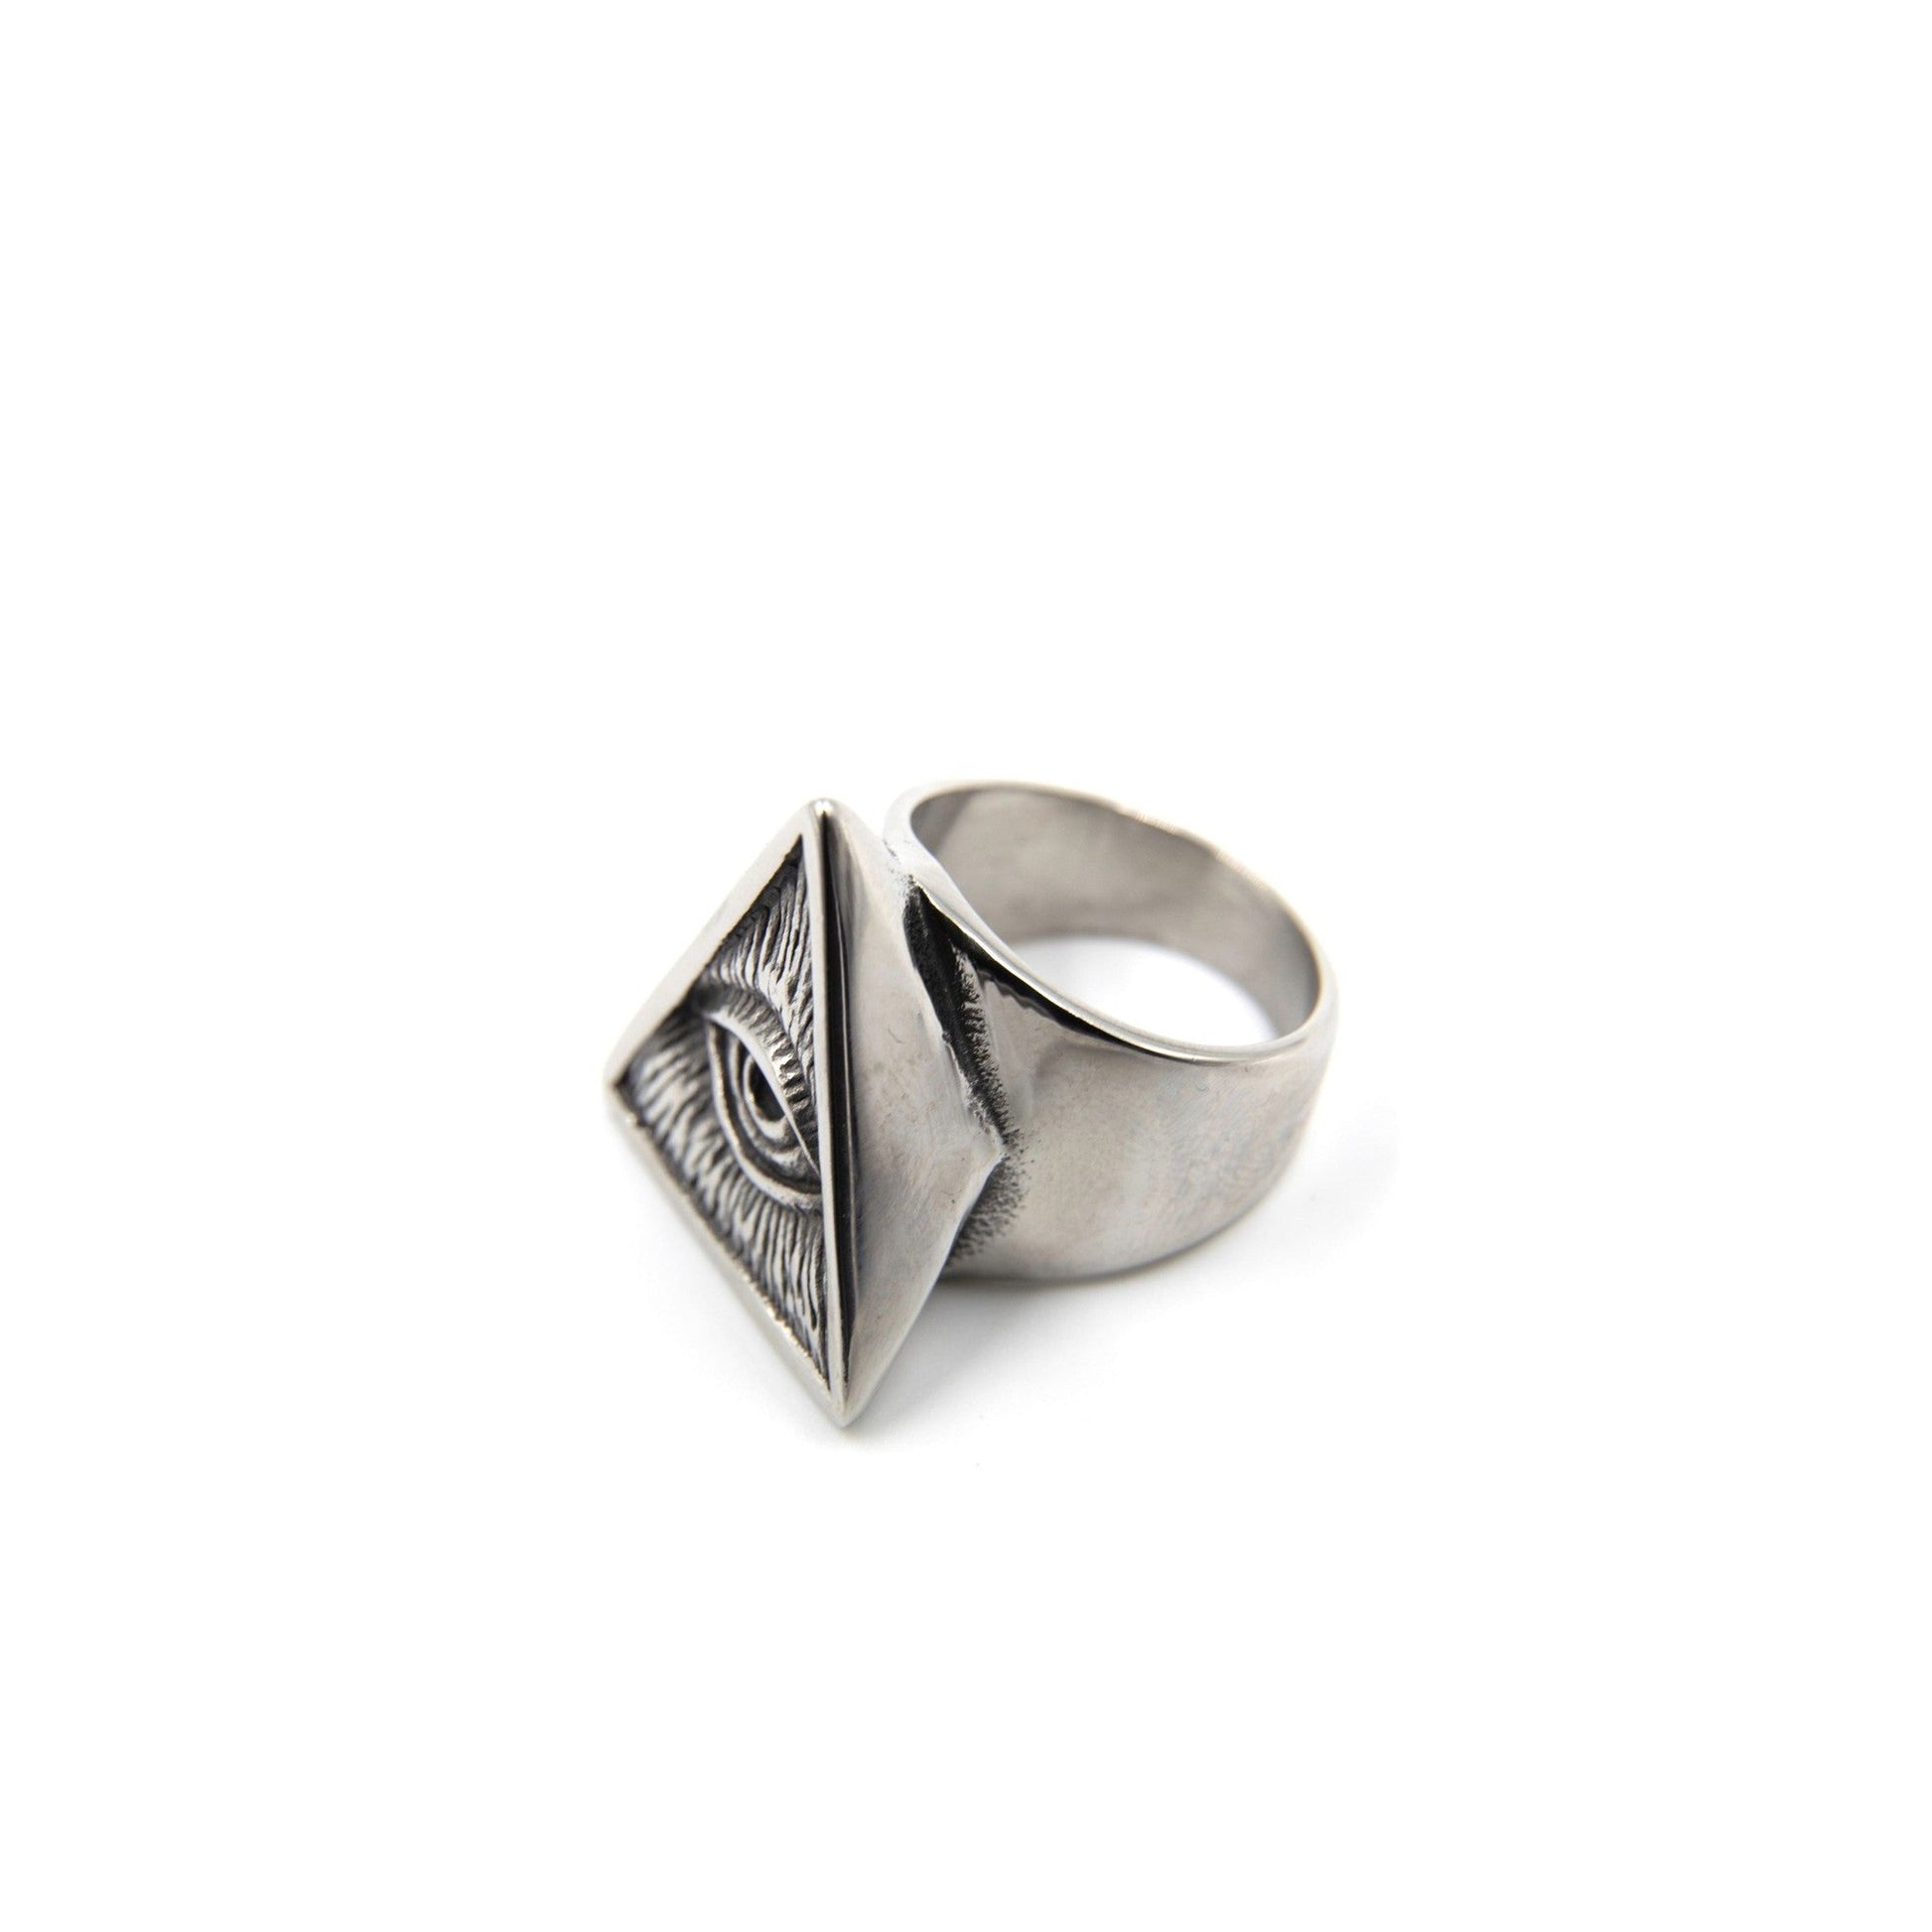 Illuminati Statement Ring in Heritage Silver